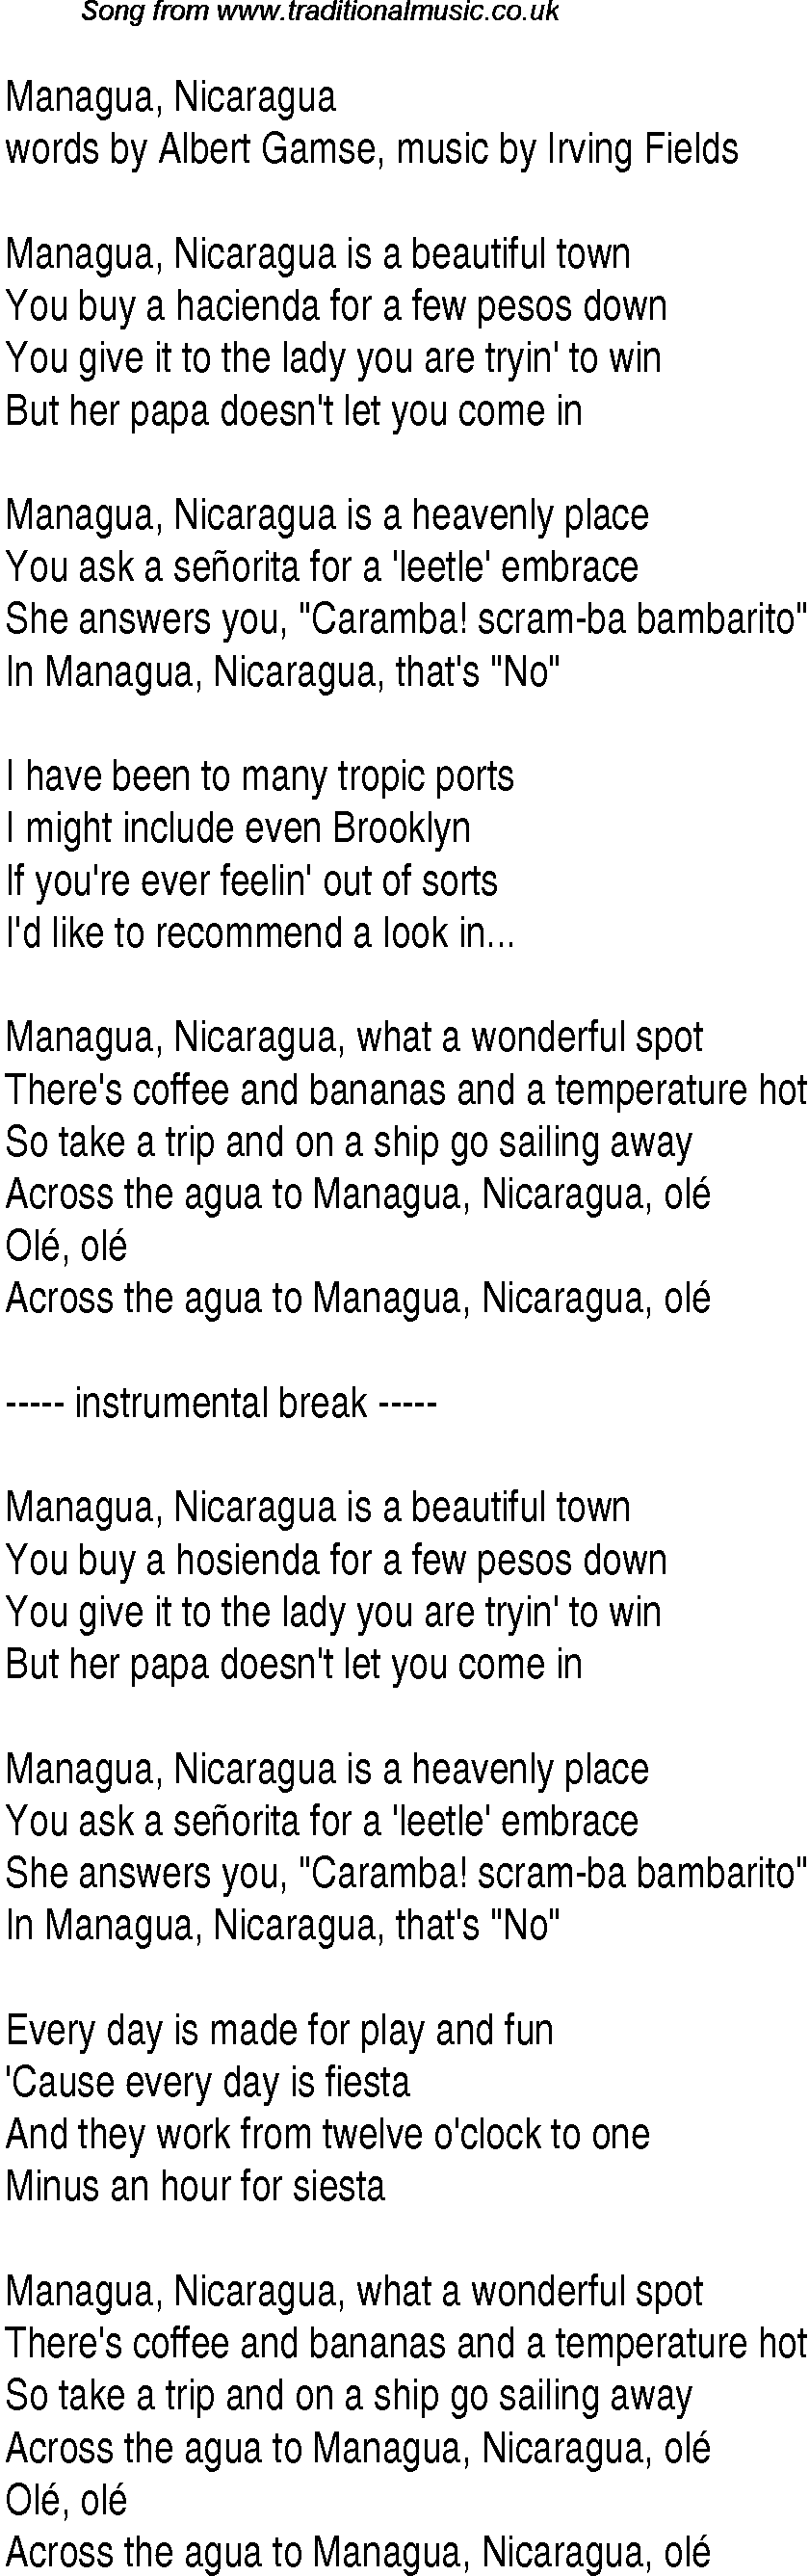 Music charts top songs 1947 - lyrics for Managua Nicaragua